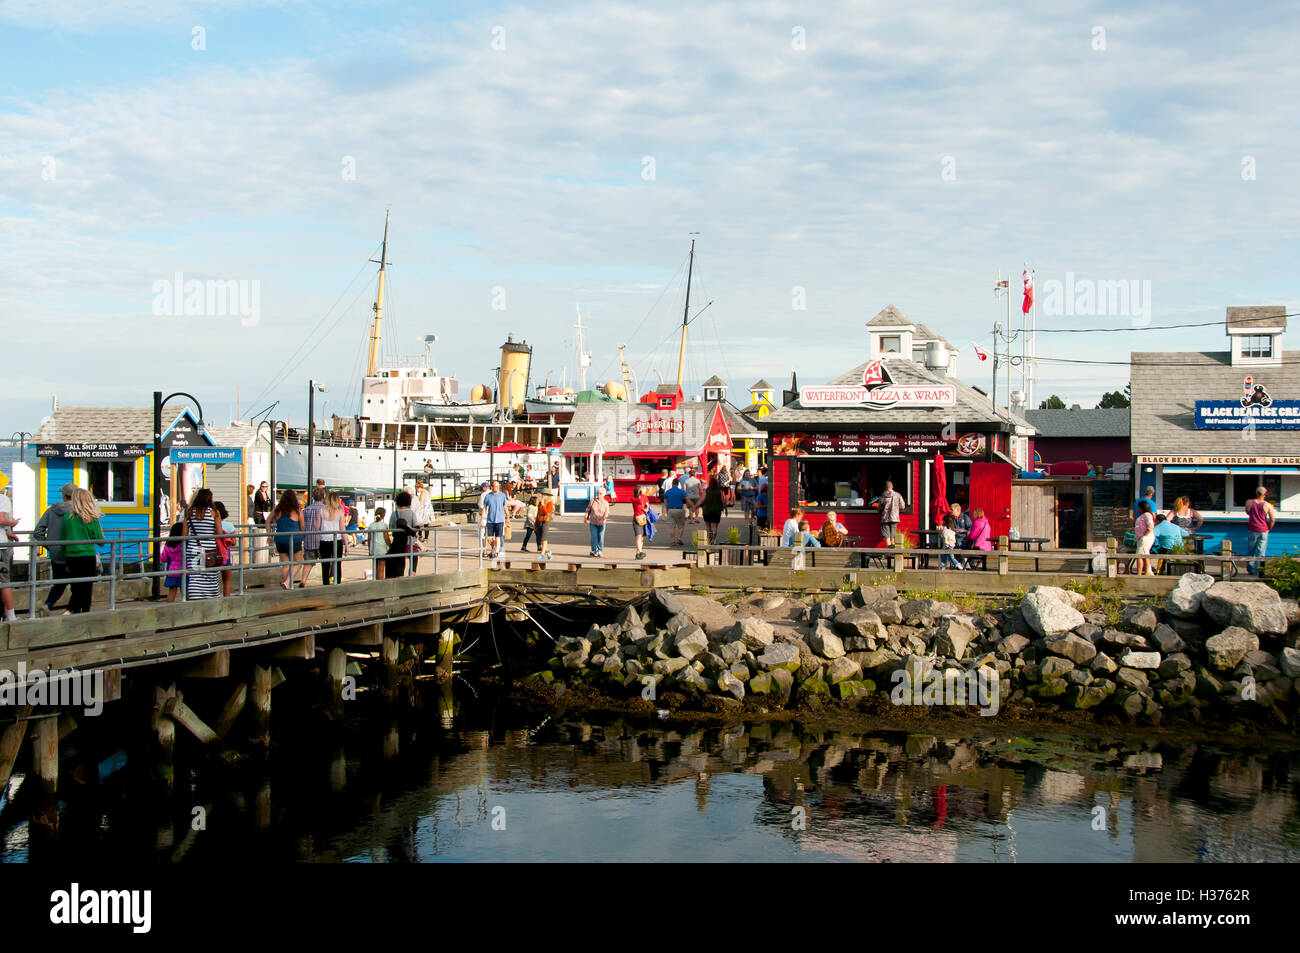 Halifax Waterfront Boardwalk - Canada Stock Photo